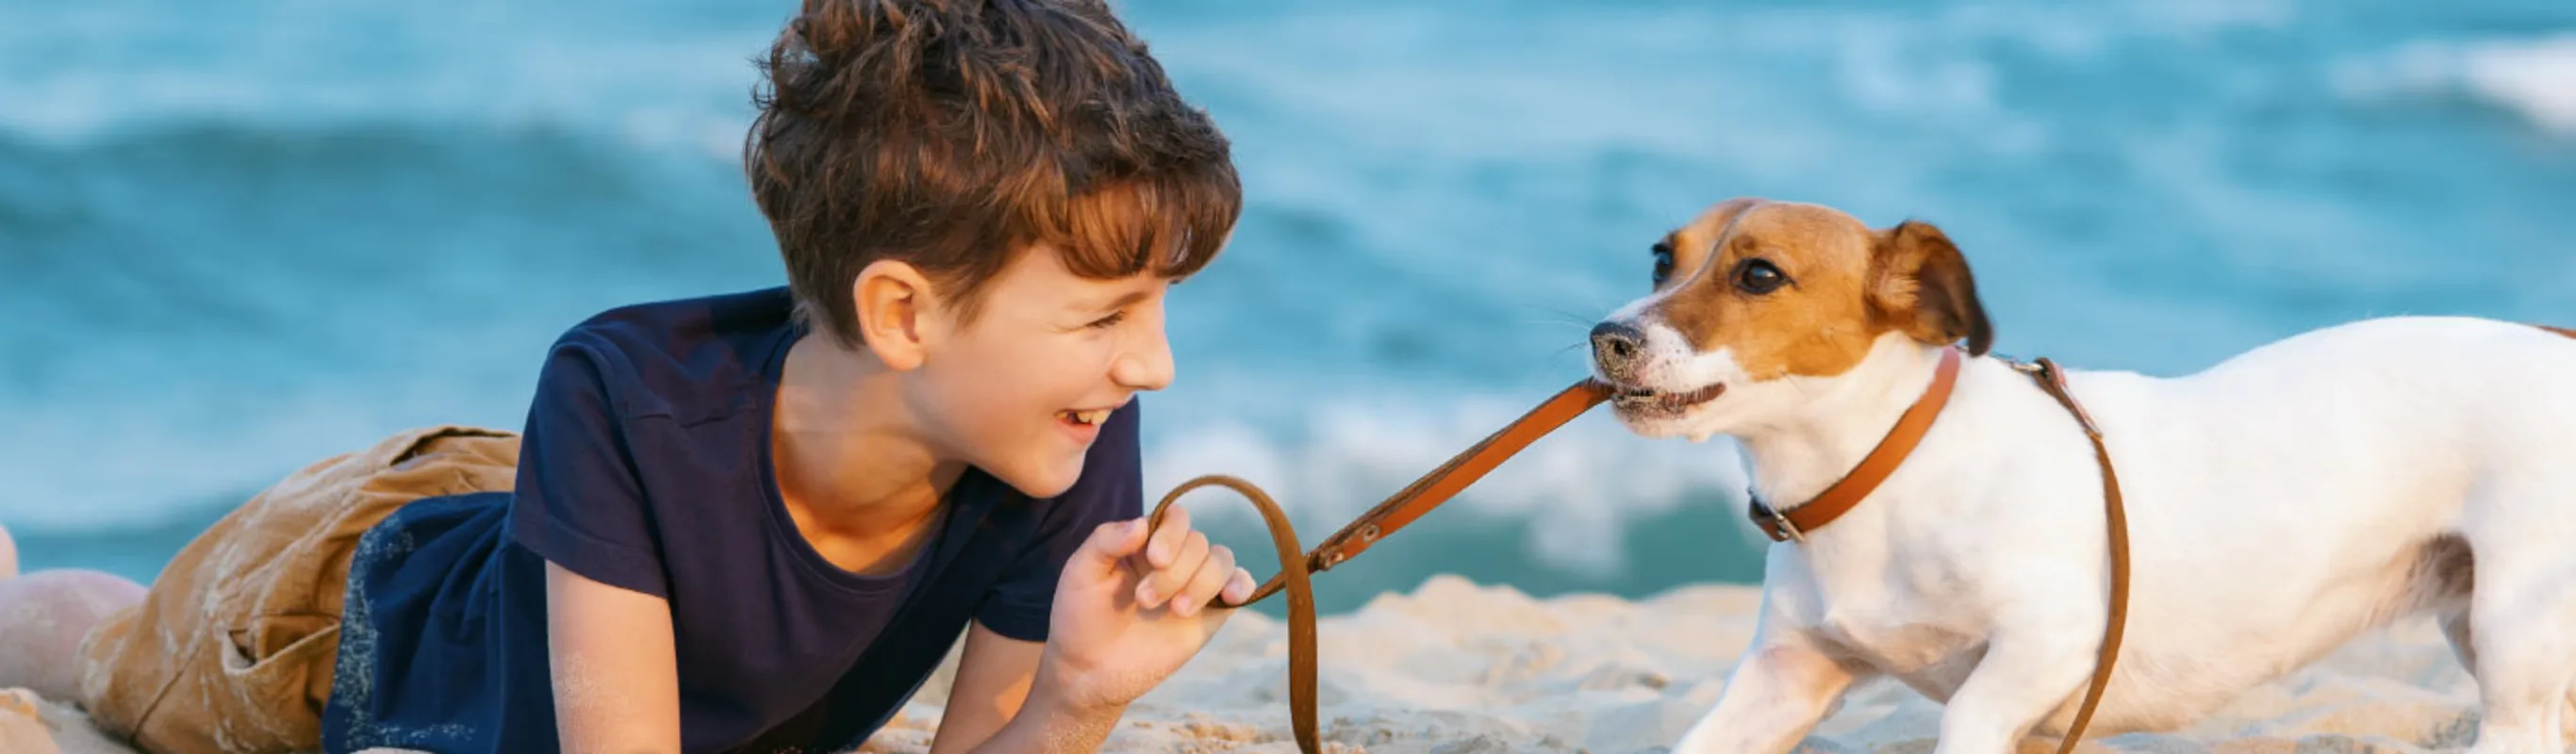 Dog playing with dog on beach